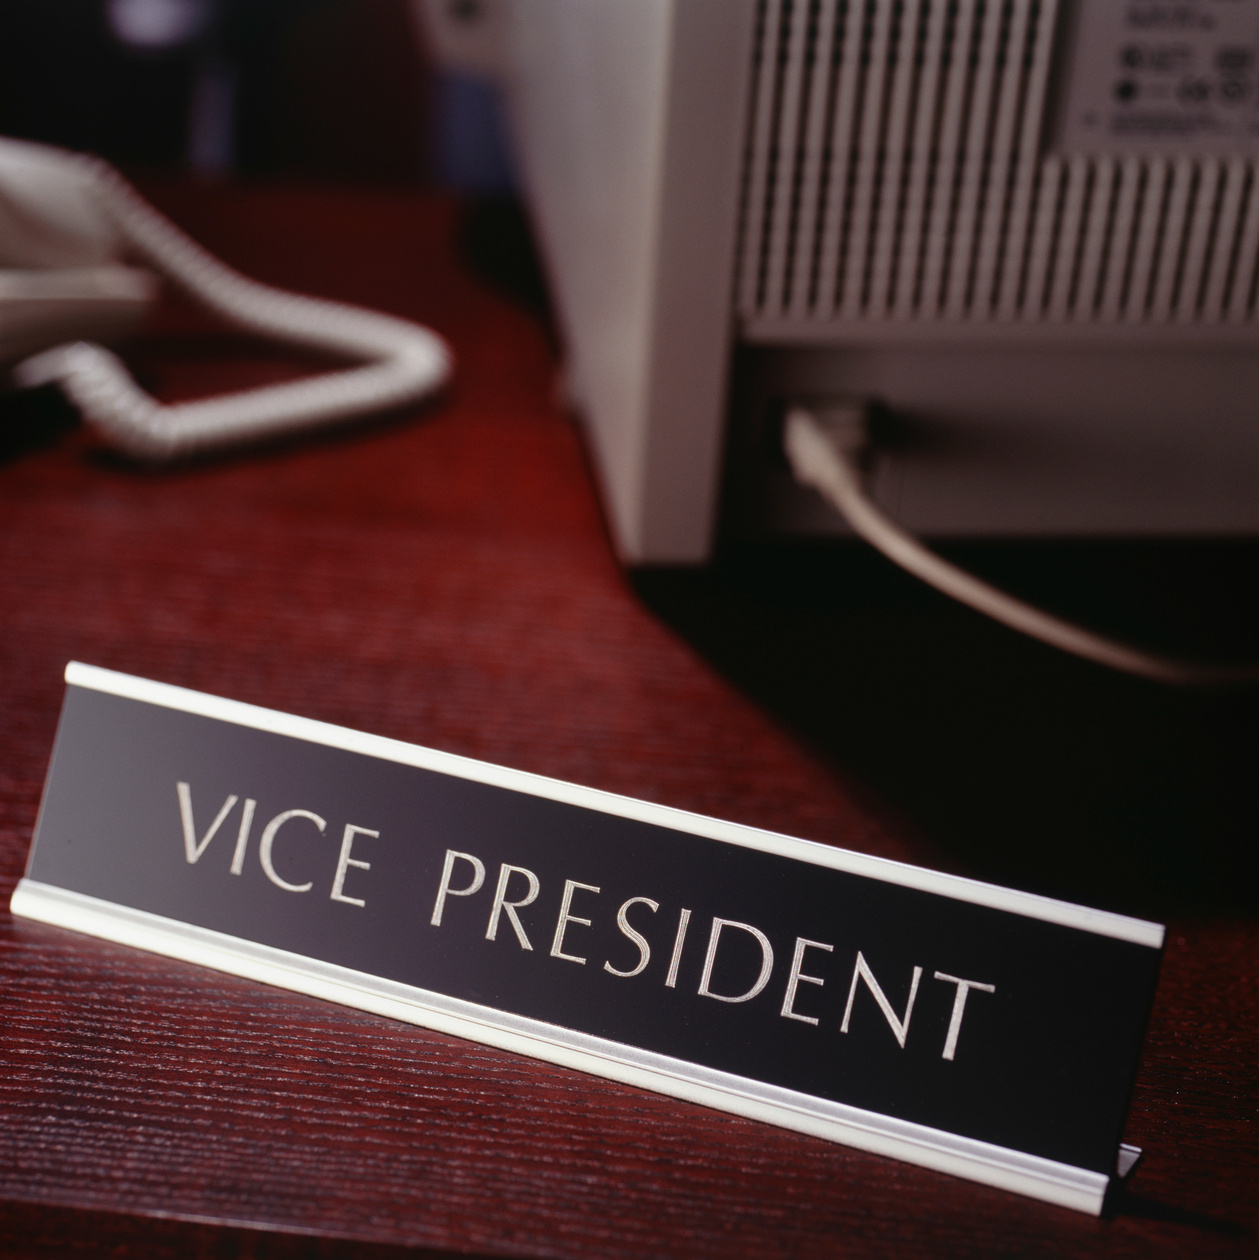 Vice president sign on desk